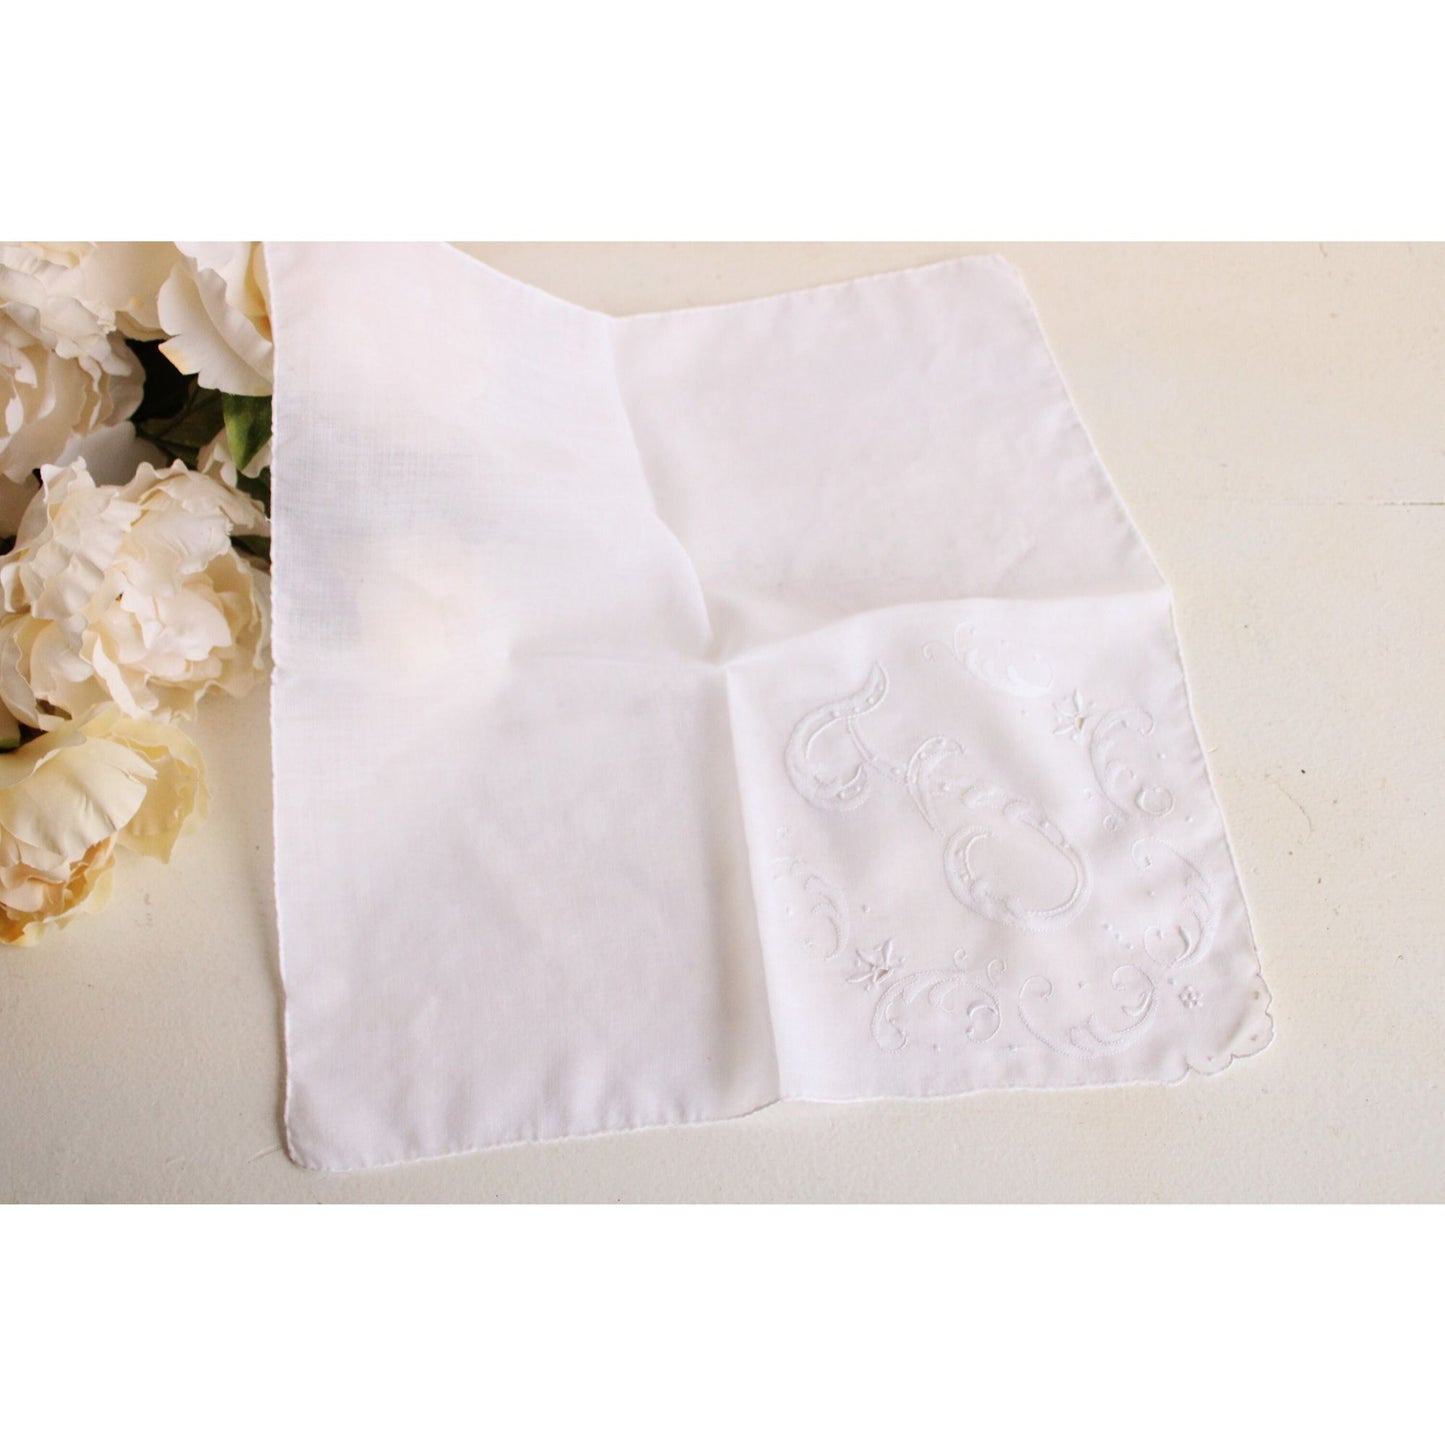 Vintage Handkerchief in White Cotton, Monogrammed with F